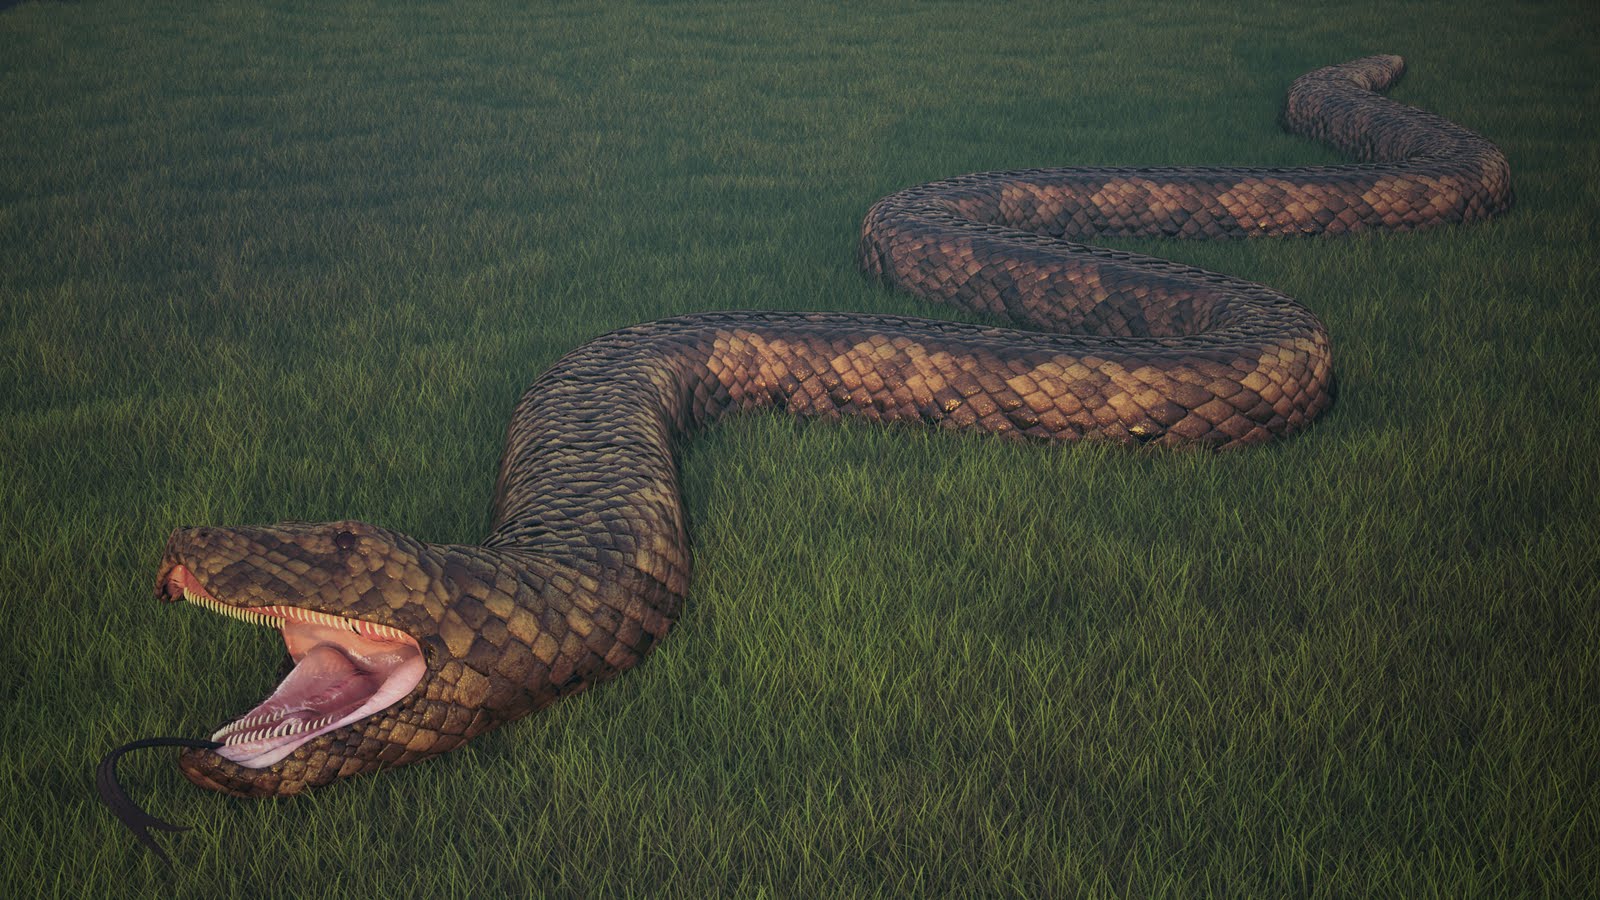 Snakes are longer. Анаконда змея. Река Амазонка змея Анаконда. Самая большая змея в мире Анаконда. ТИТАНОБОА змея и Анаконда.